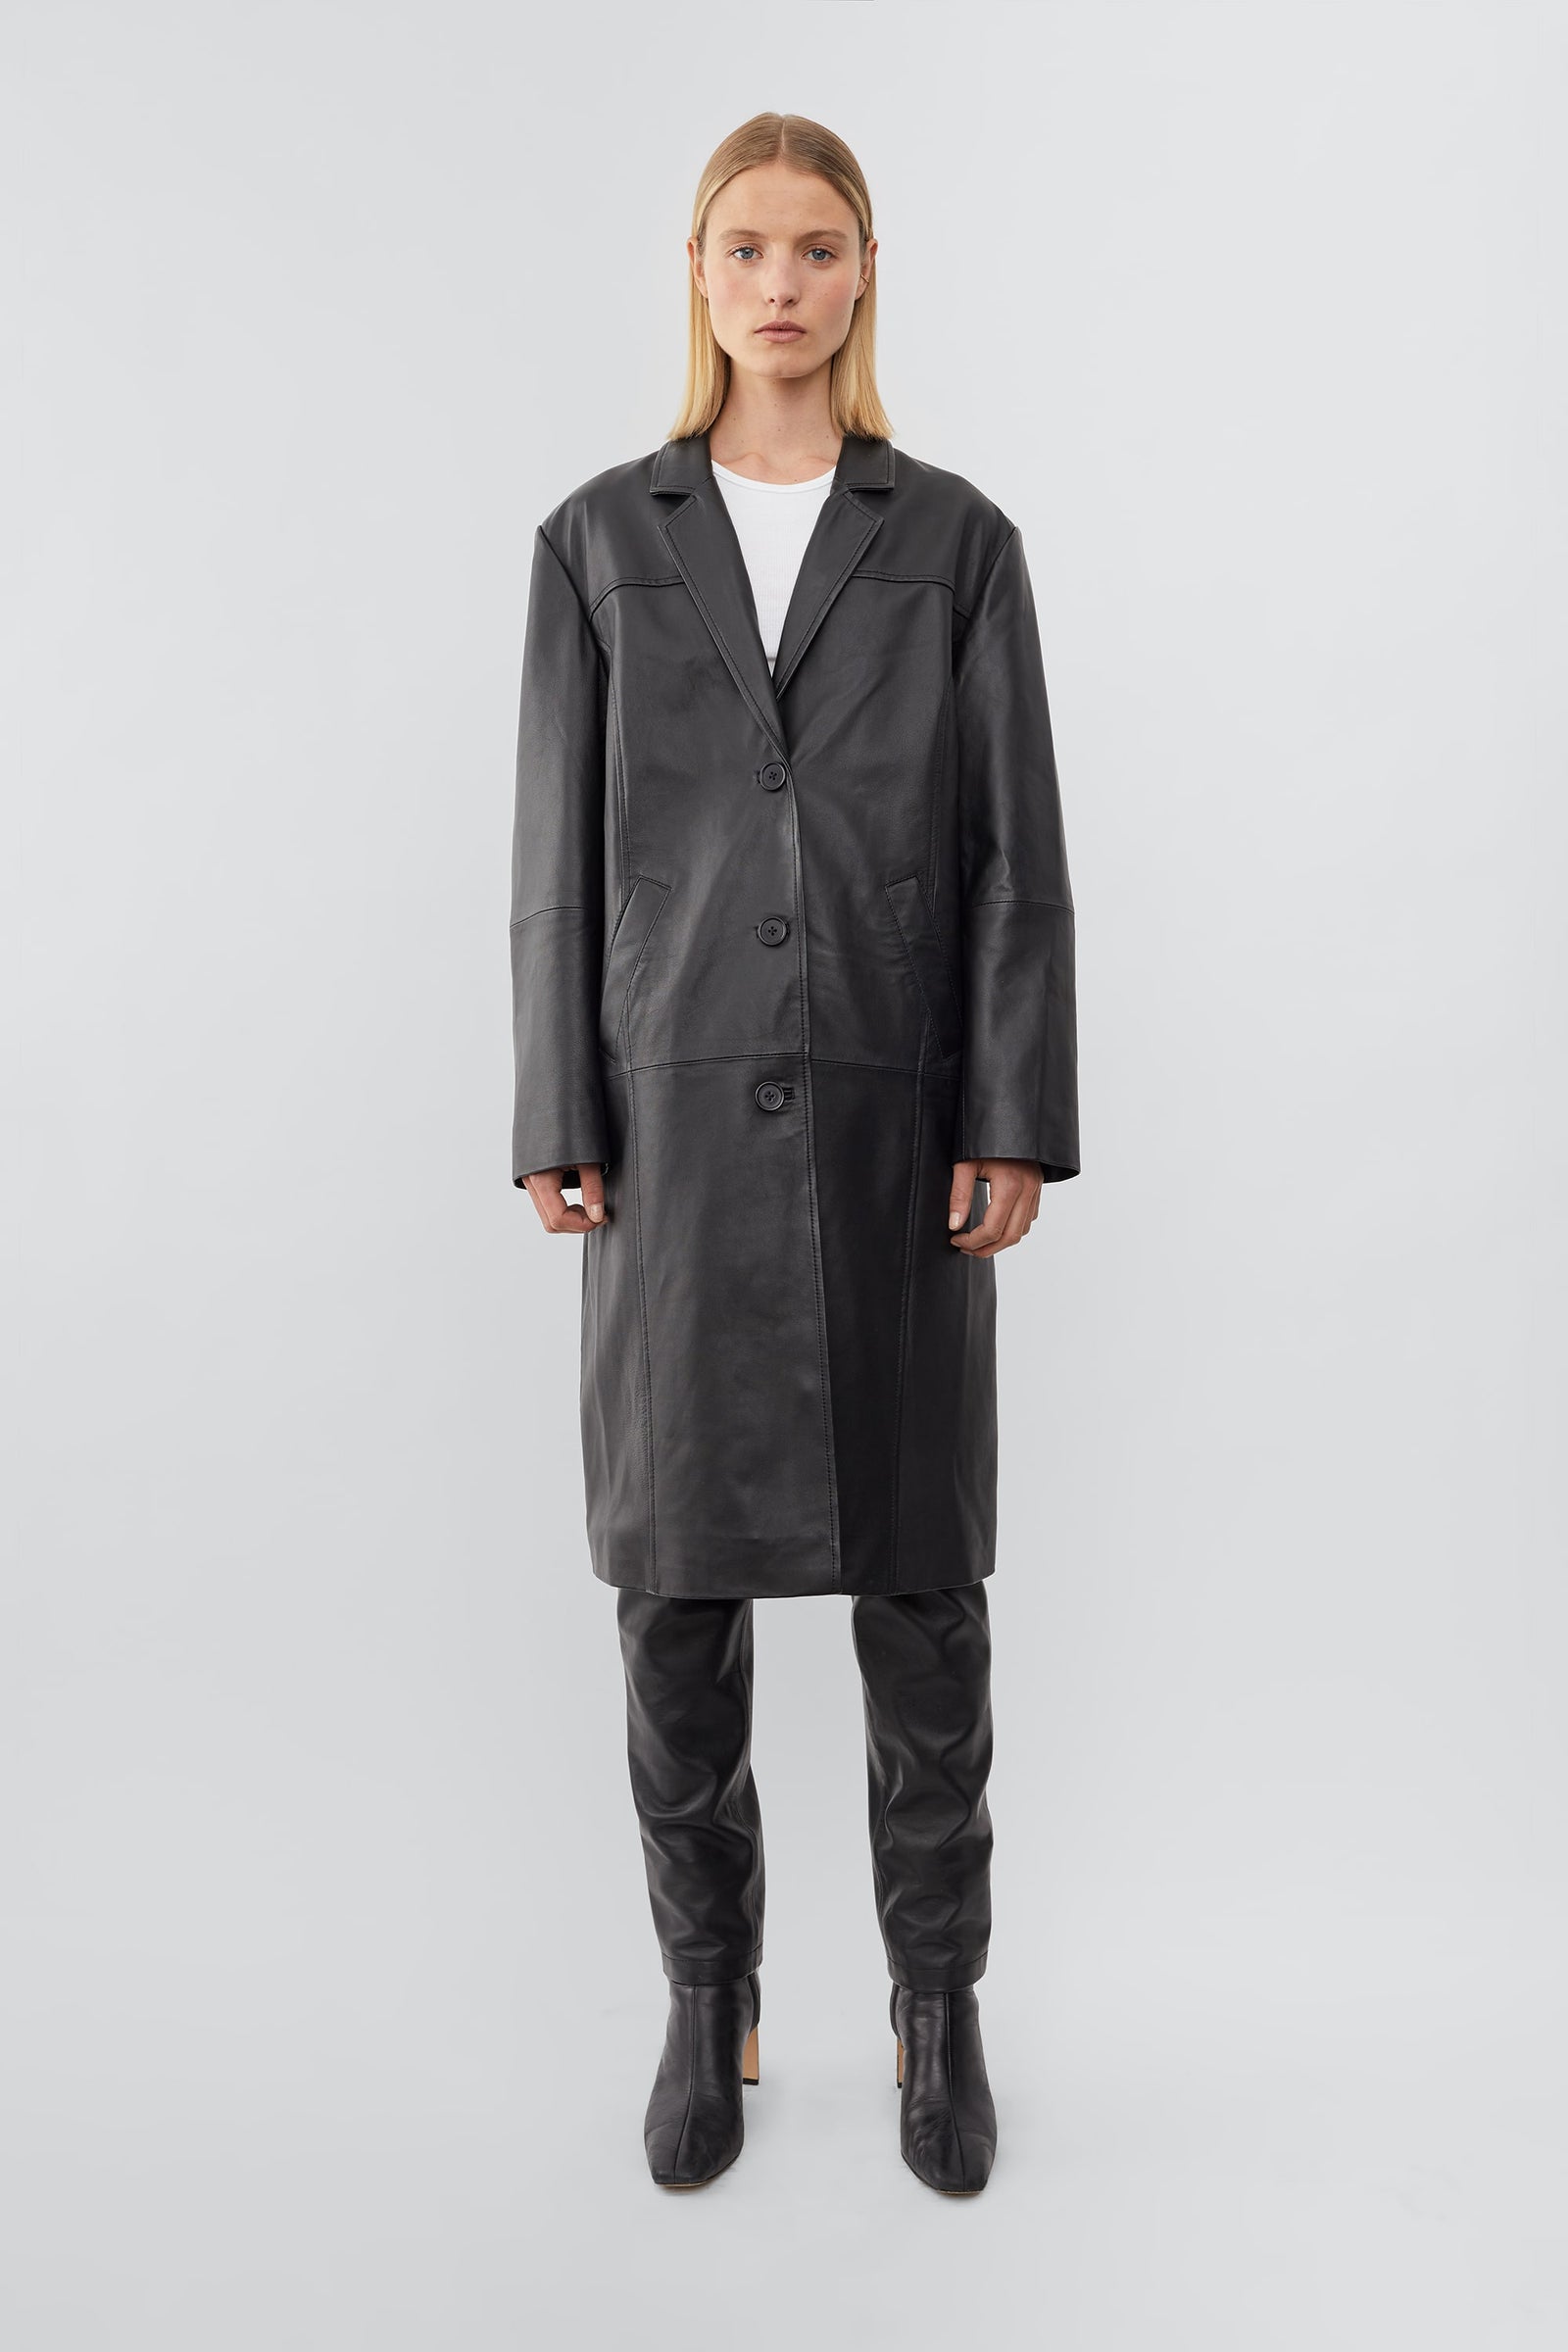 Ollie Black Leather Coat | Shop now – Deadwood Studios